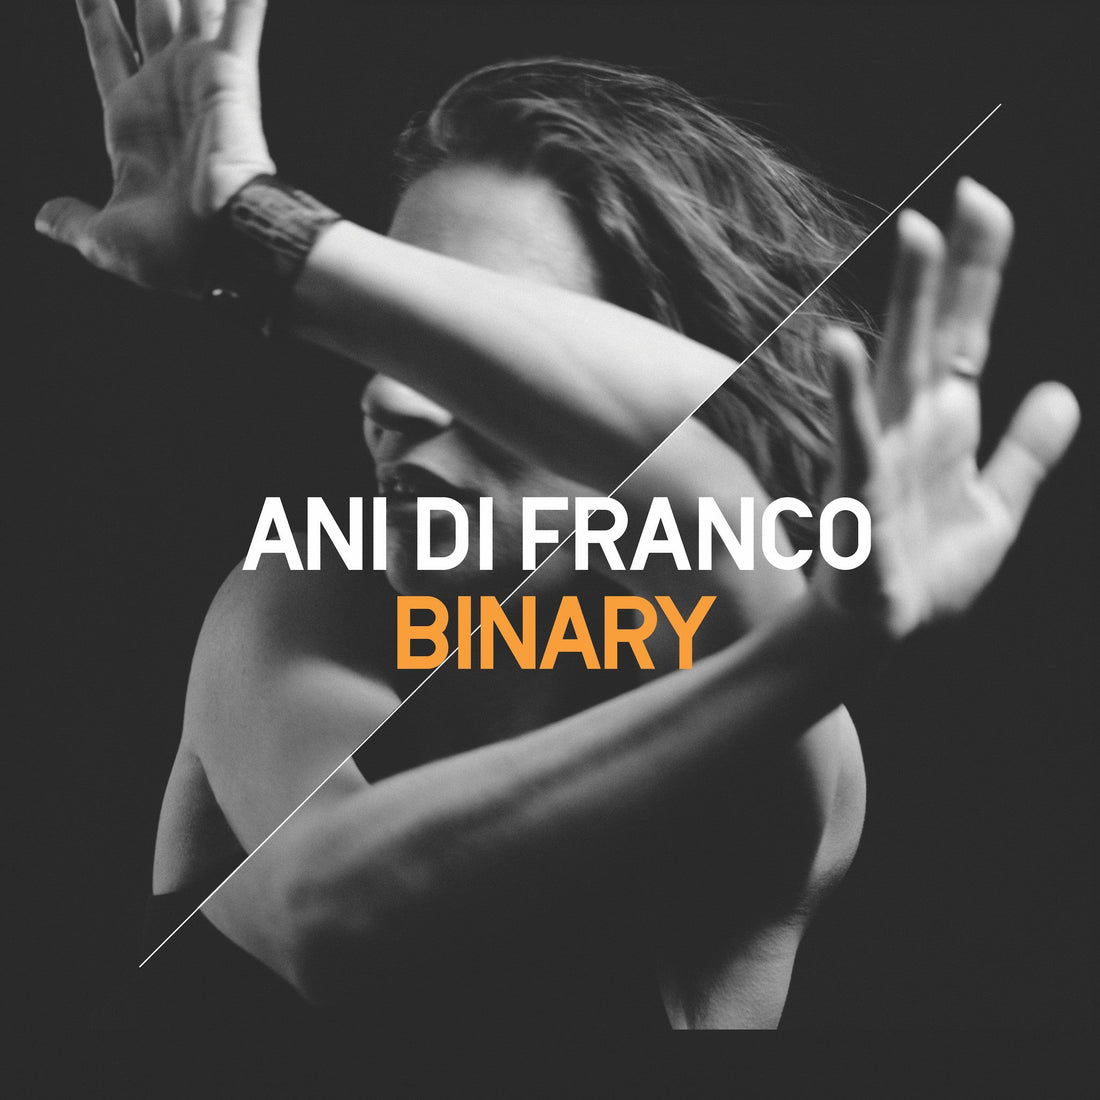 Ani's new album BINARY coming June 9 - pre-order on PledgeMusic today!